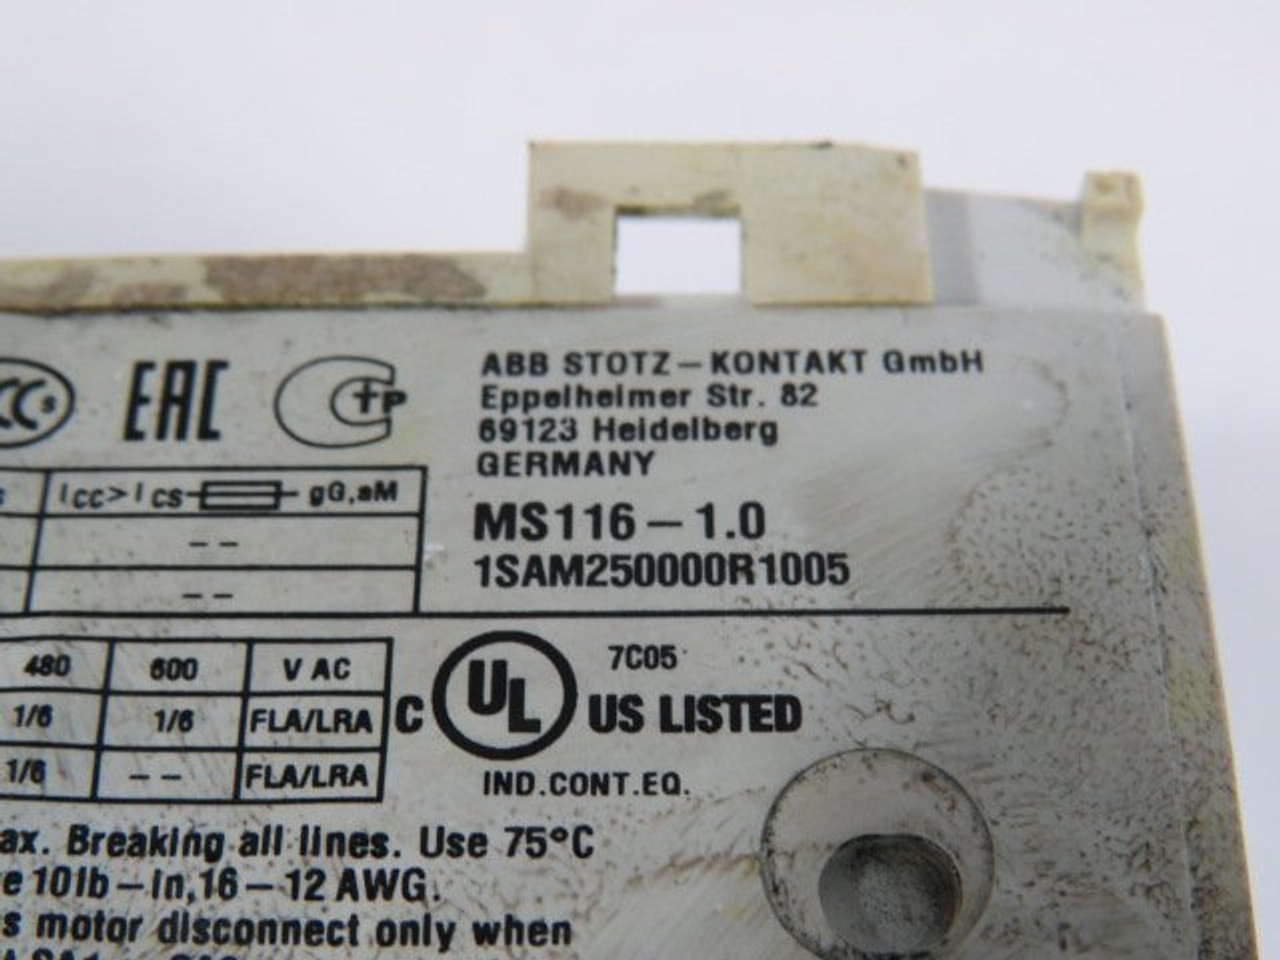 ABB MS116-1.0/1SAM250000R1005 Manual Motor Starter 0.63-1.0A USED